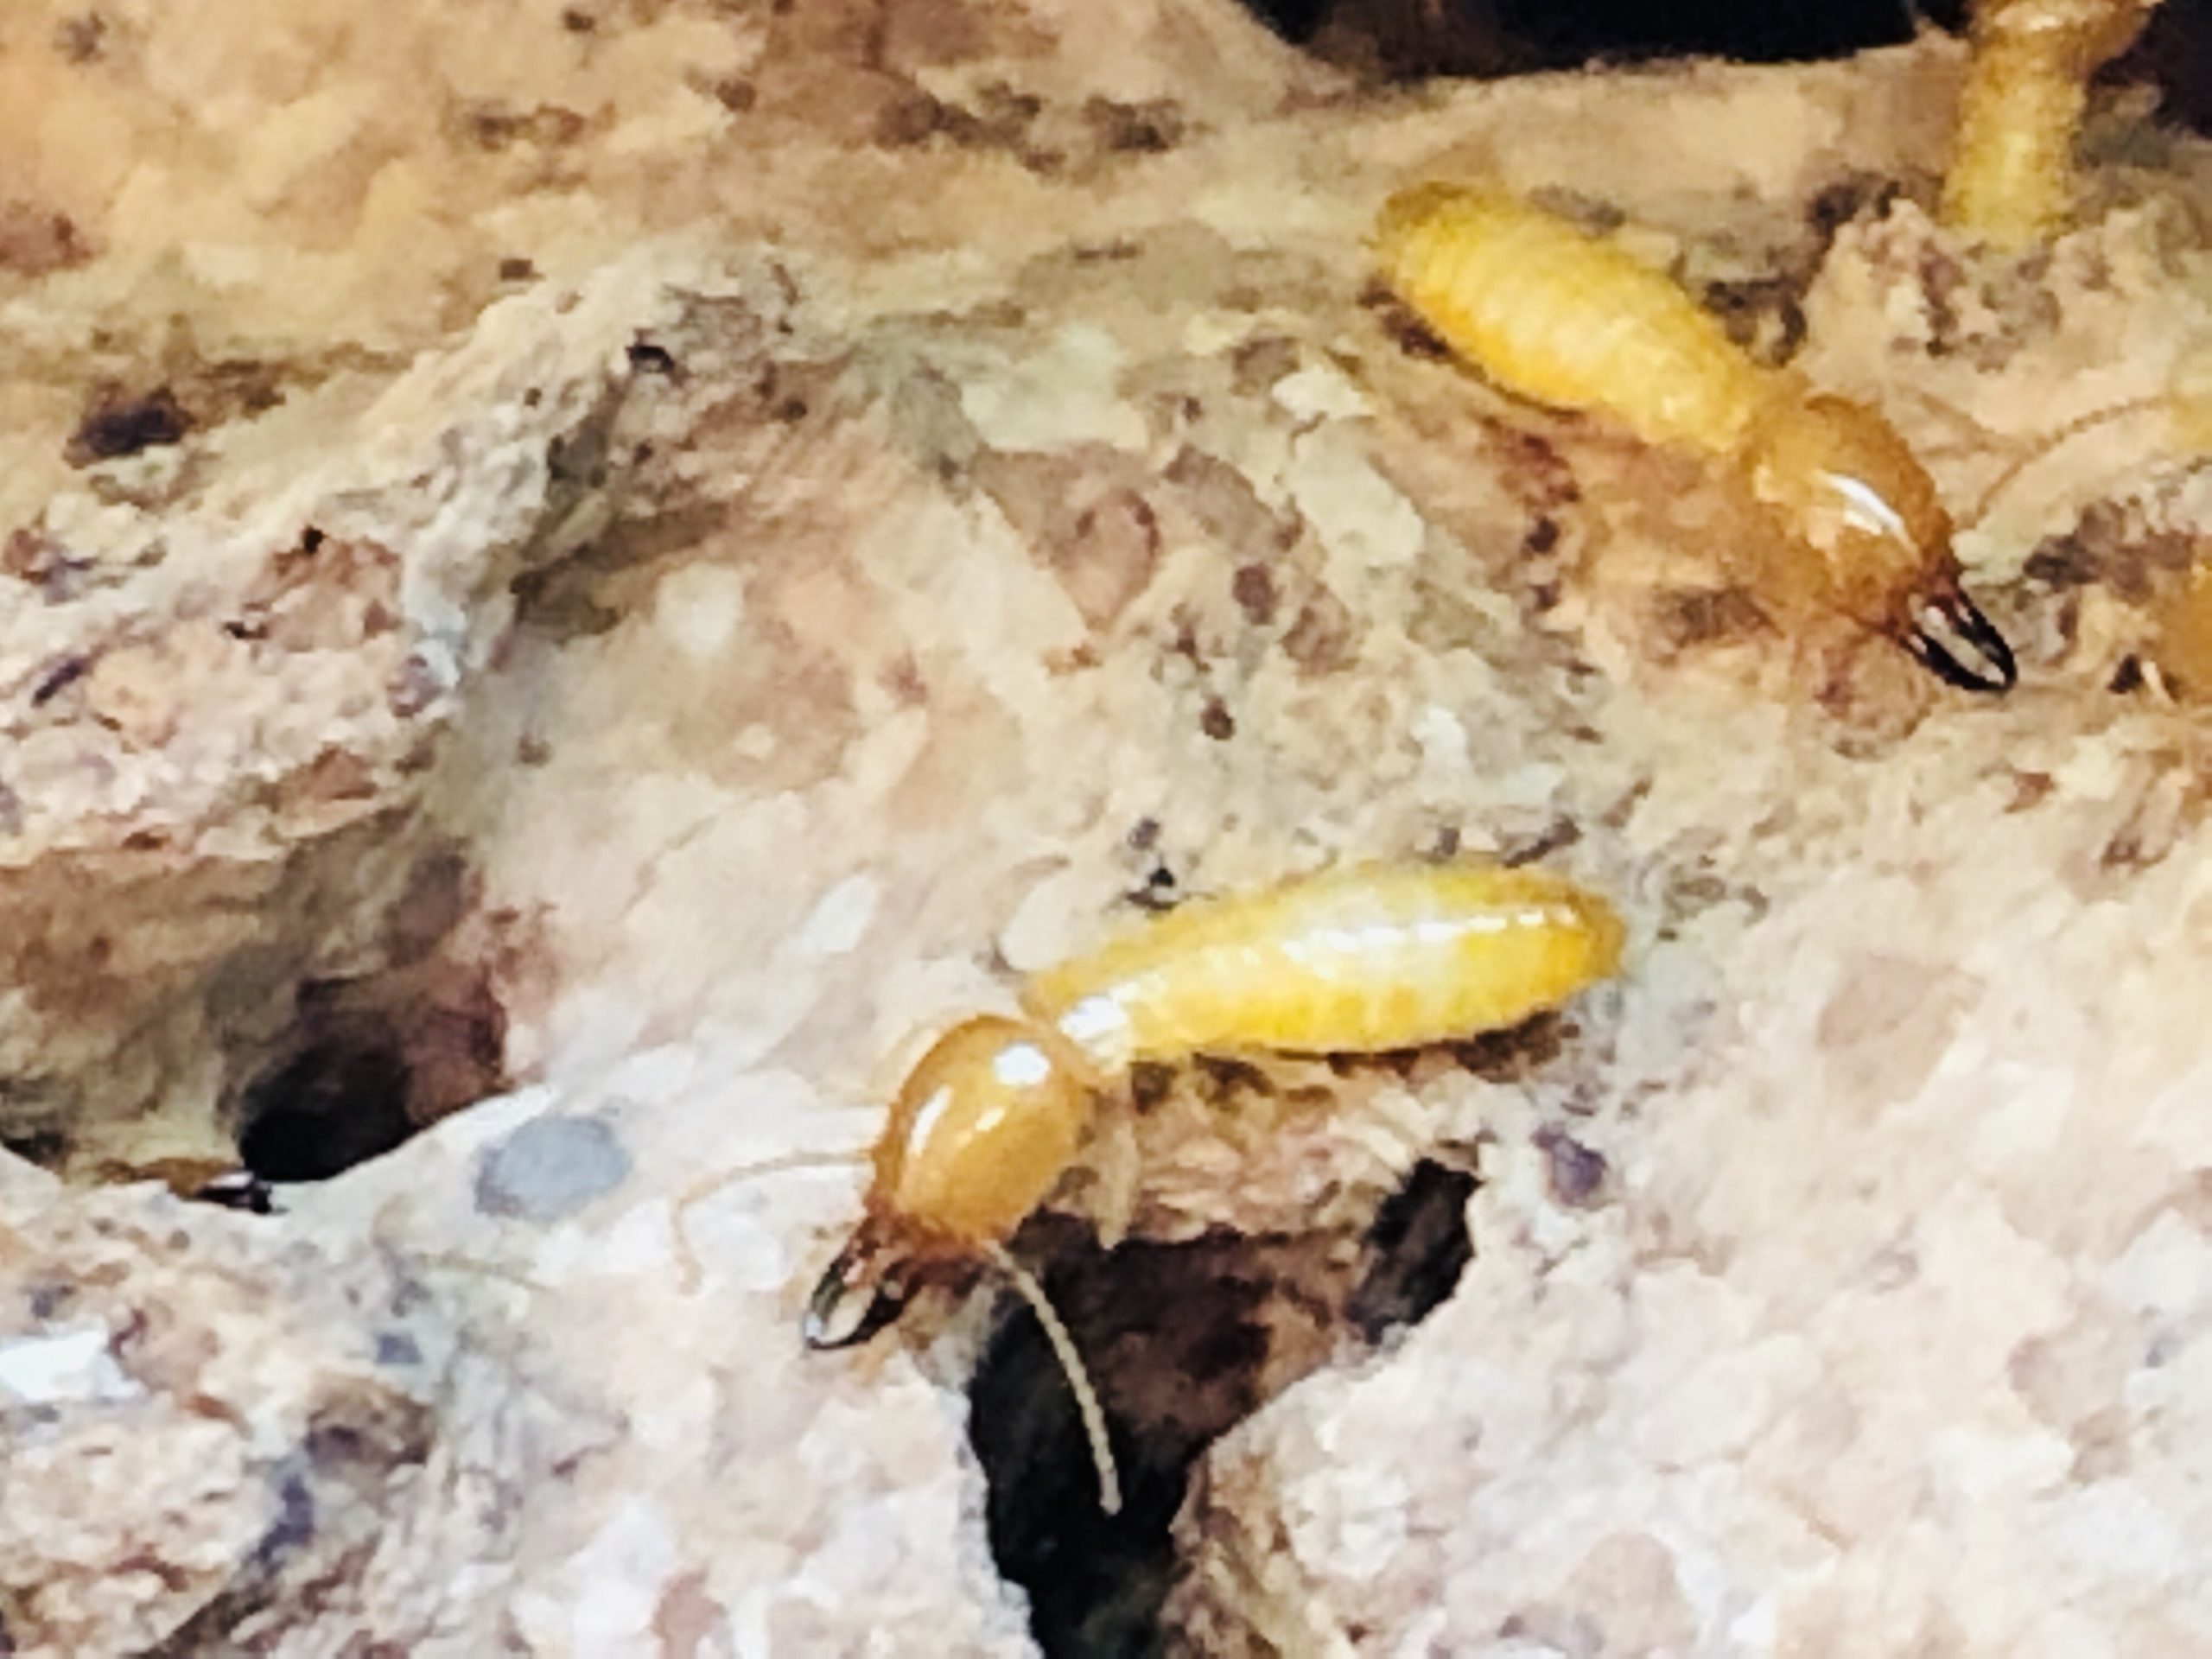 Subterranean termite in Florida